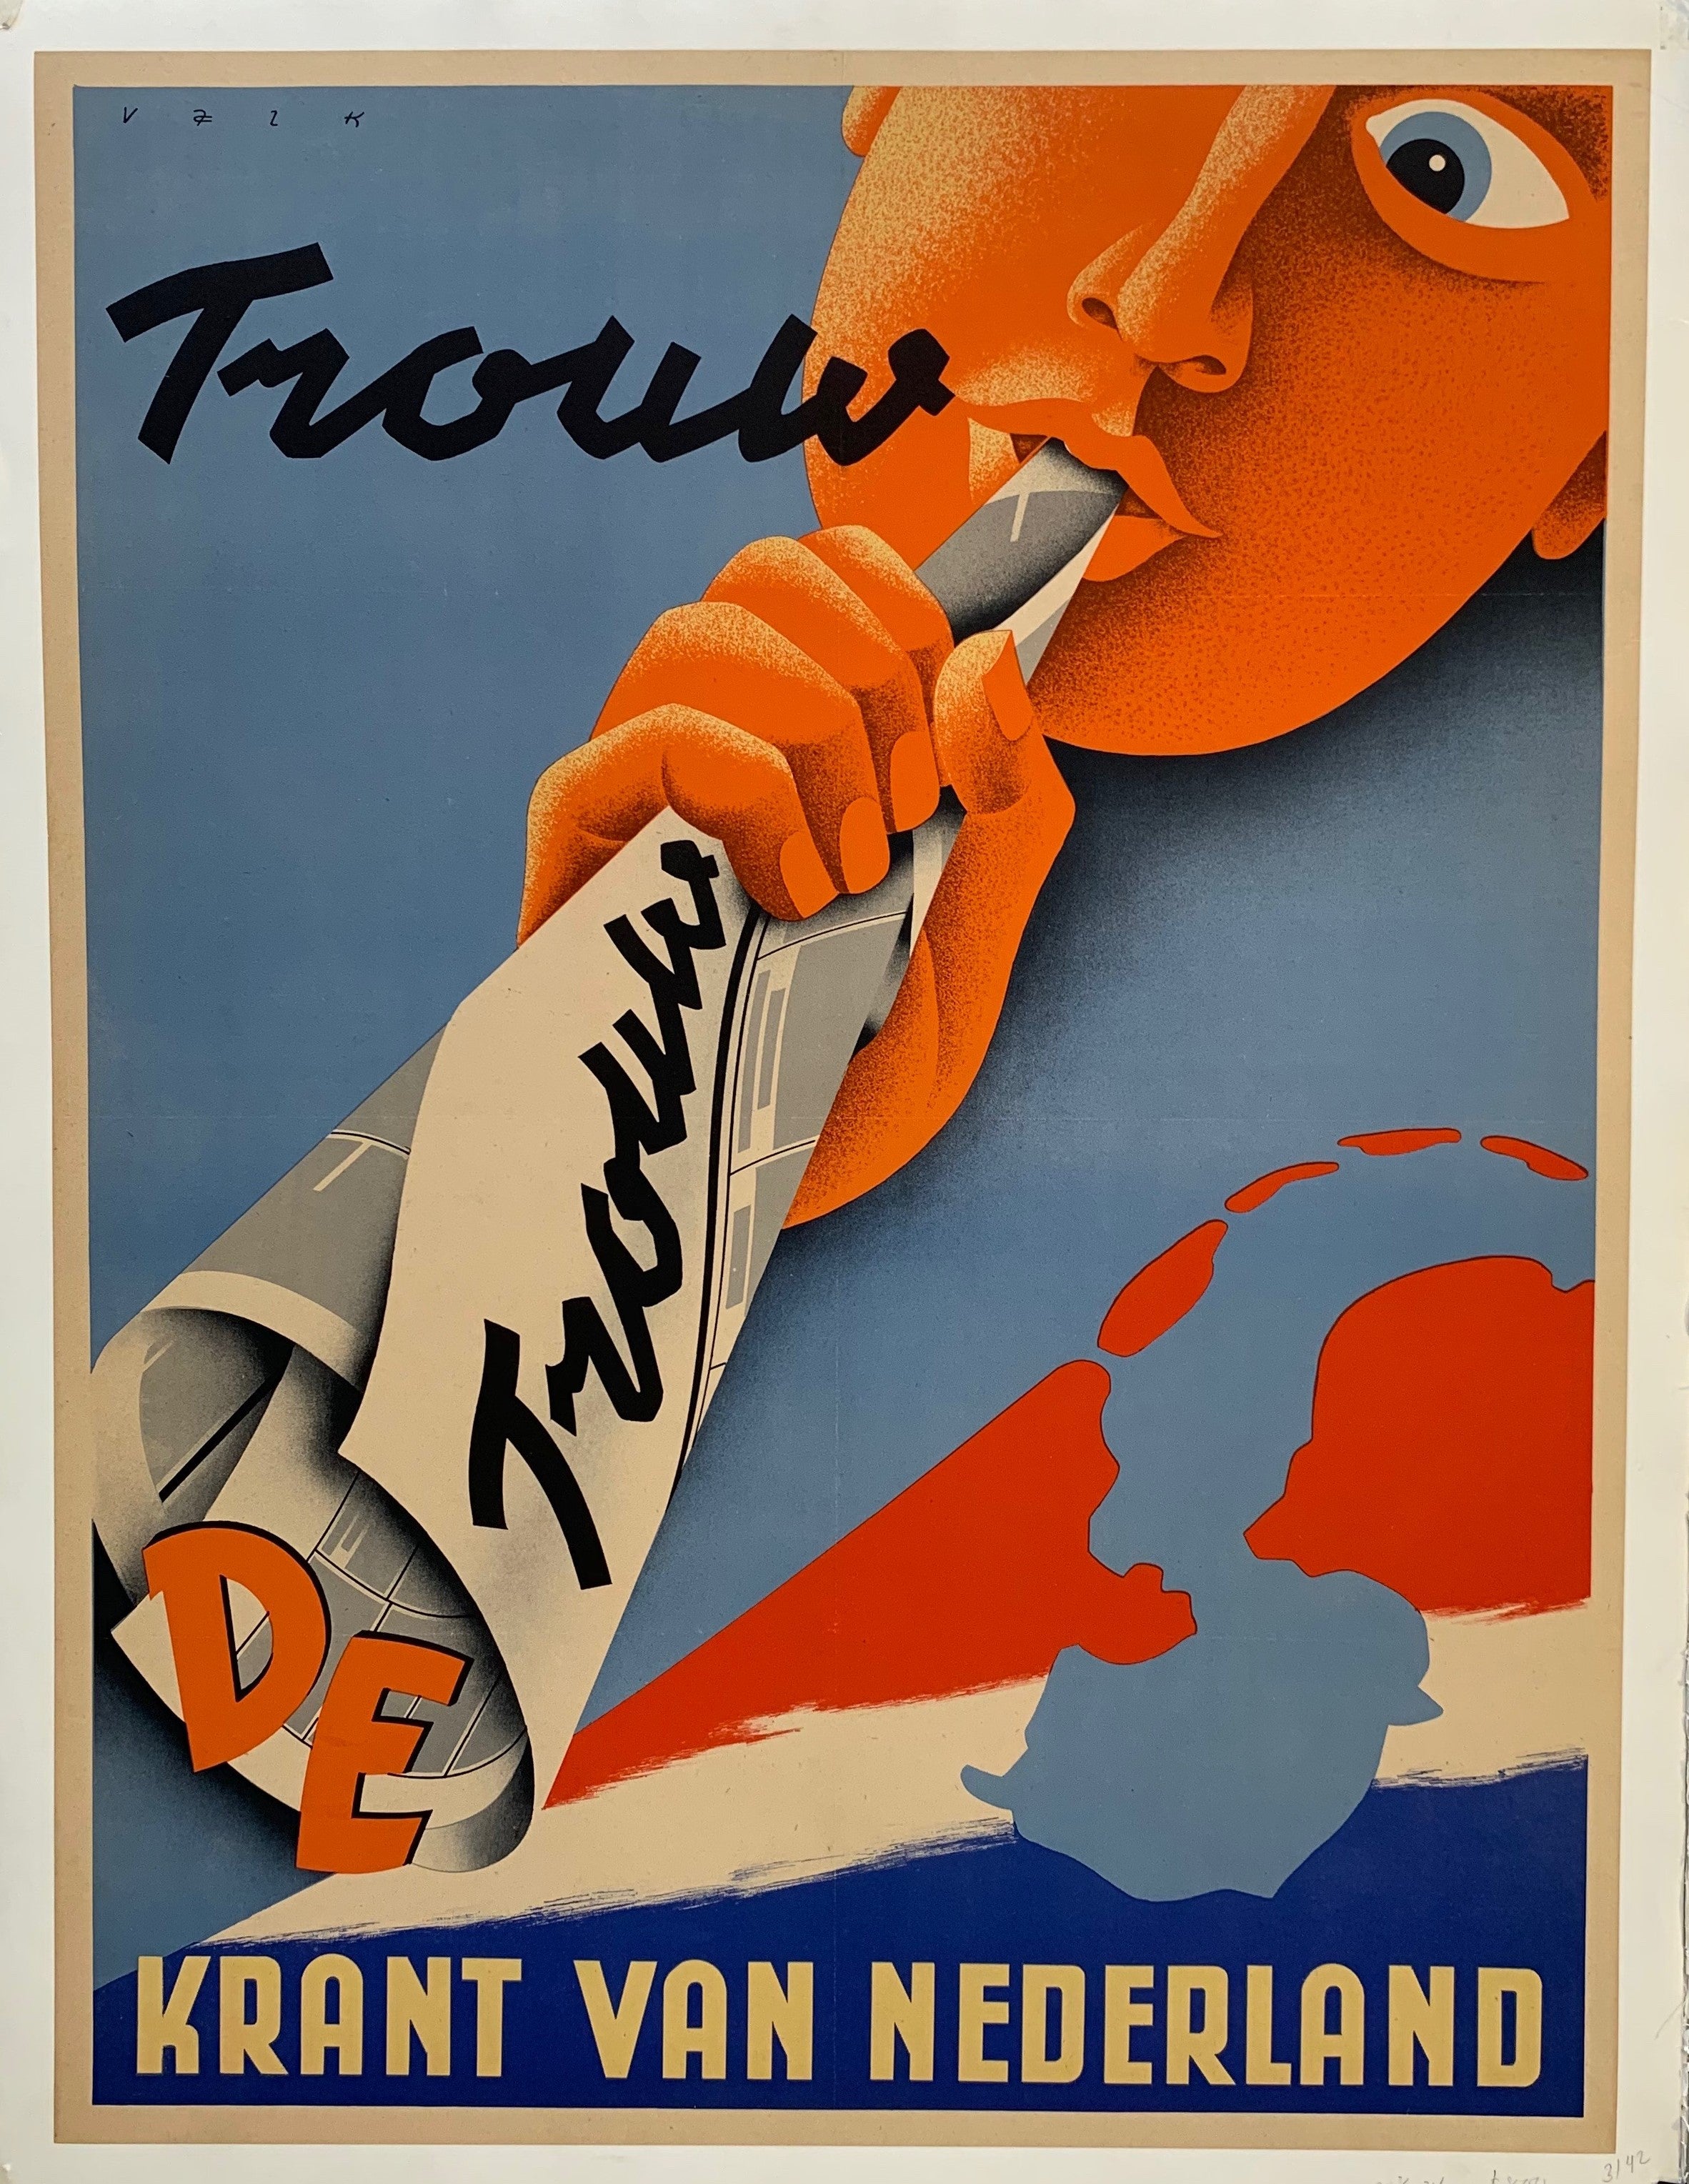 Trouw de Krant Nederland – Poster